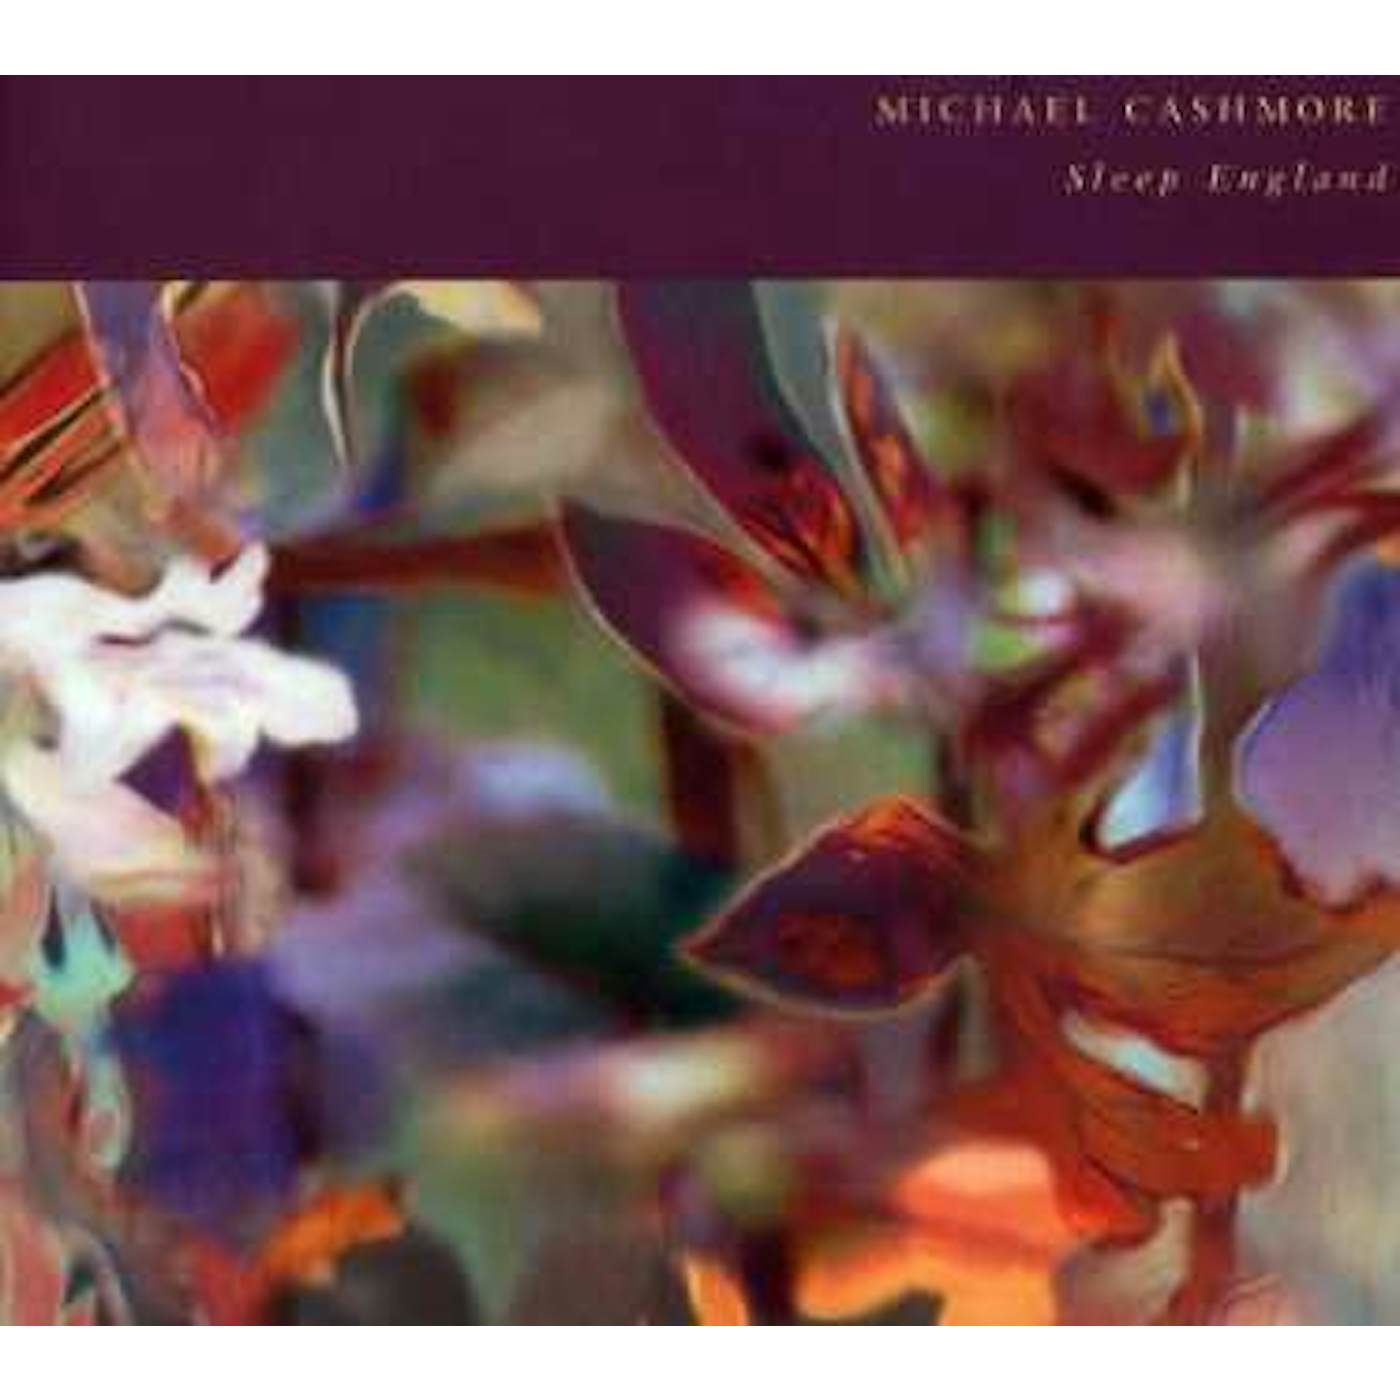 Michael Cashmore SLEEP ENGLAND CD